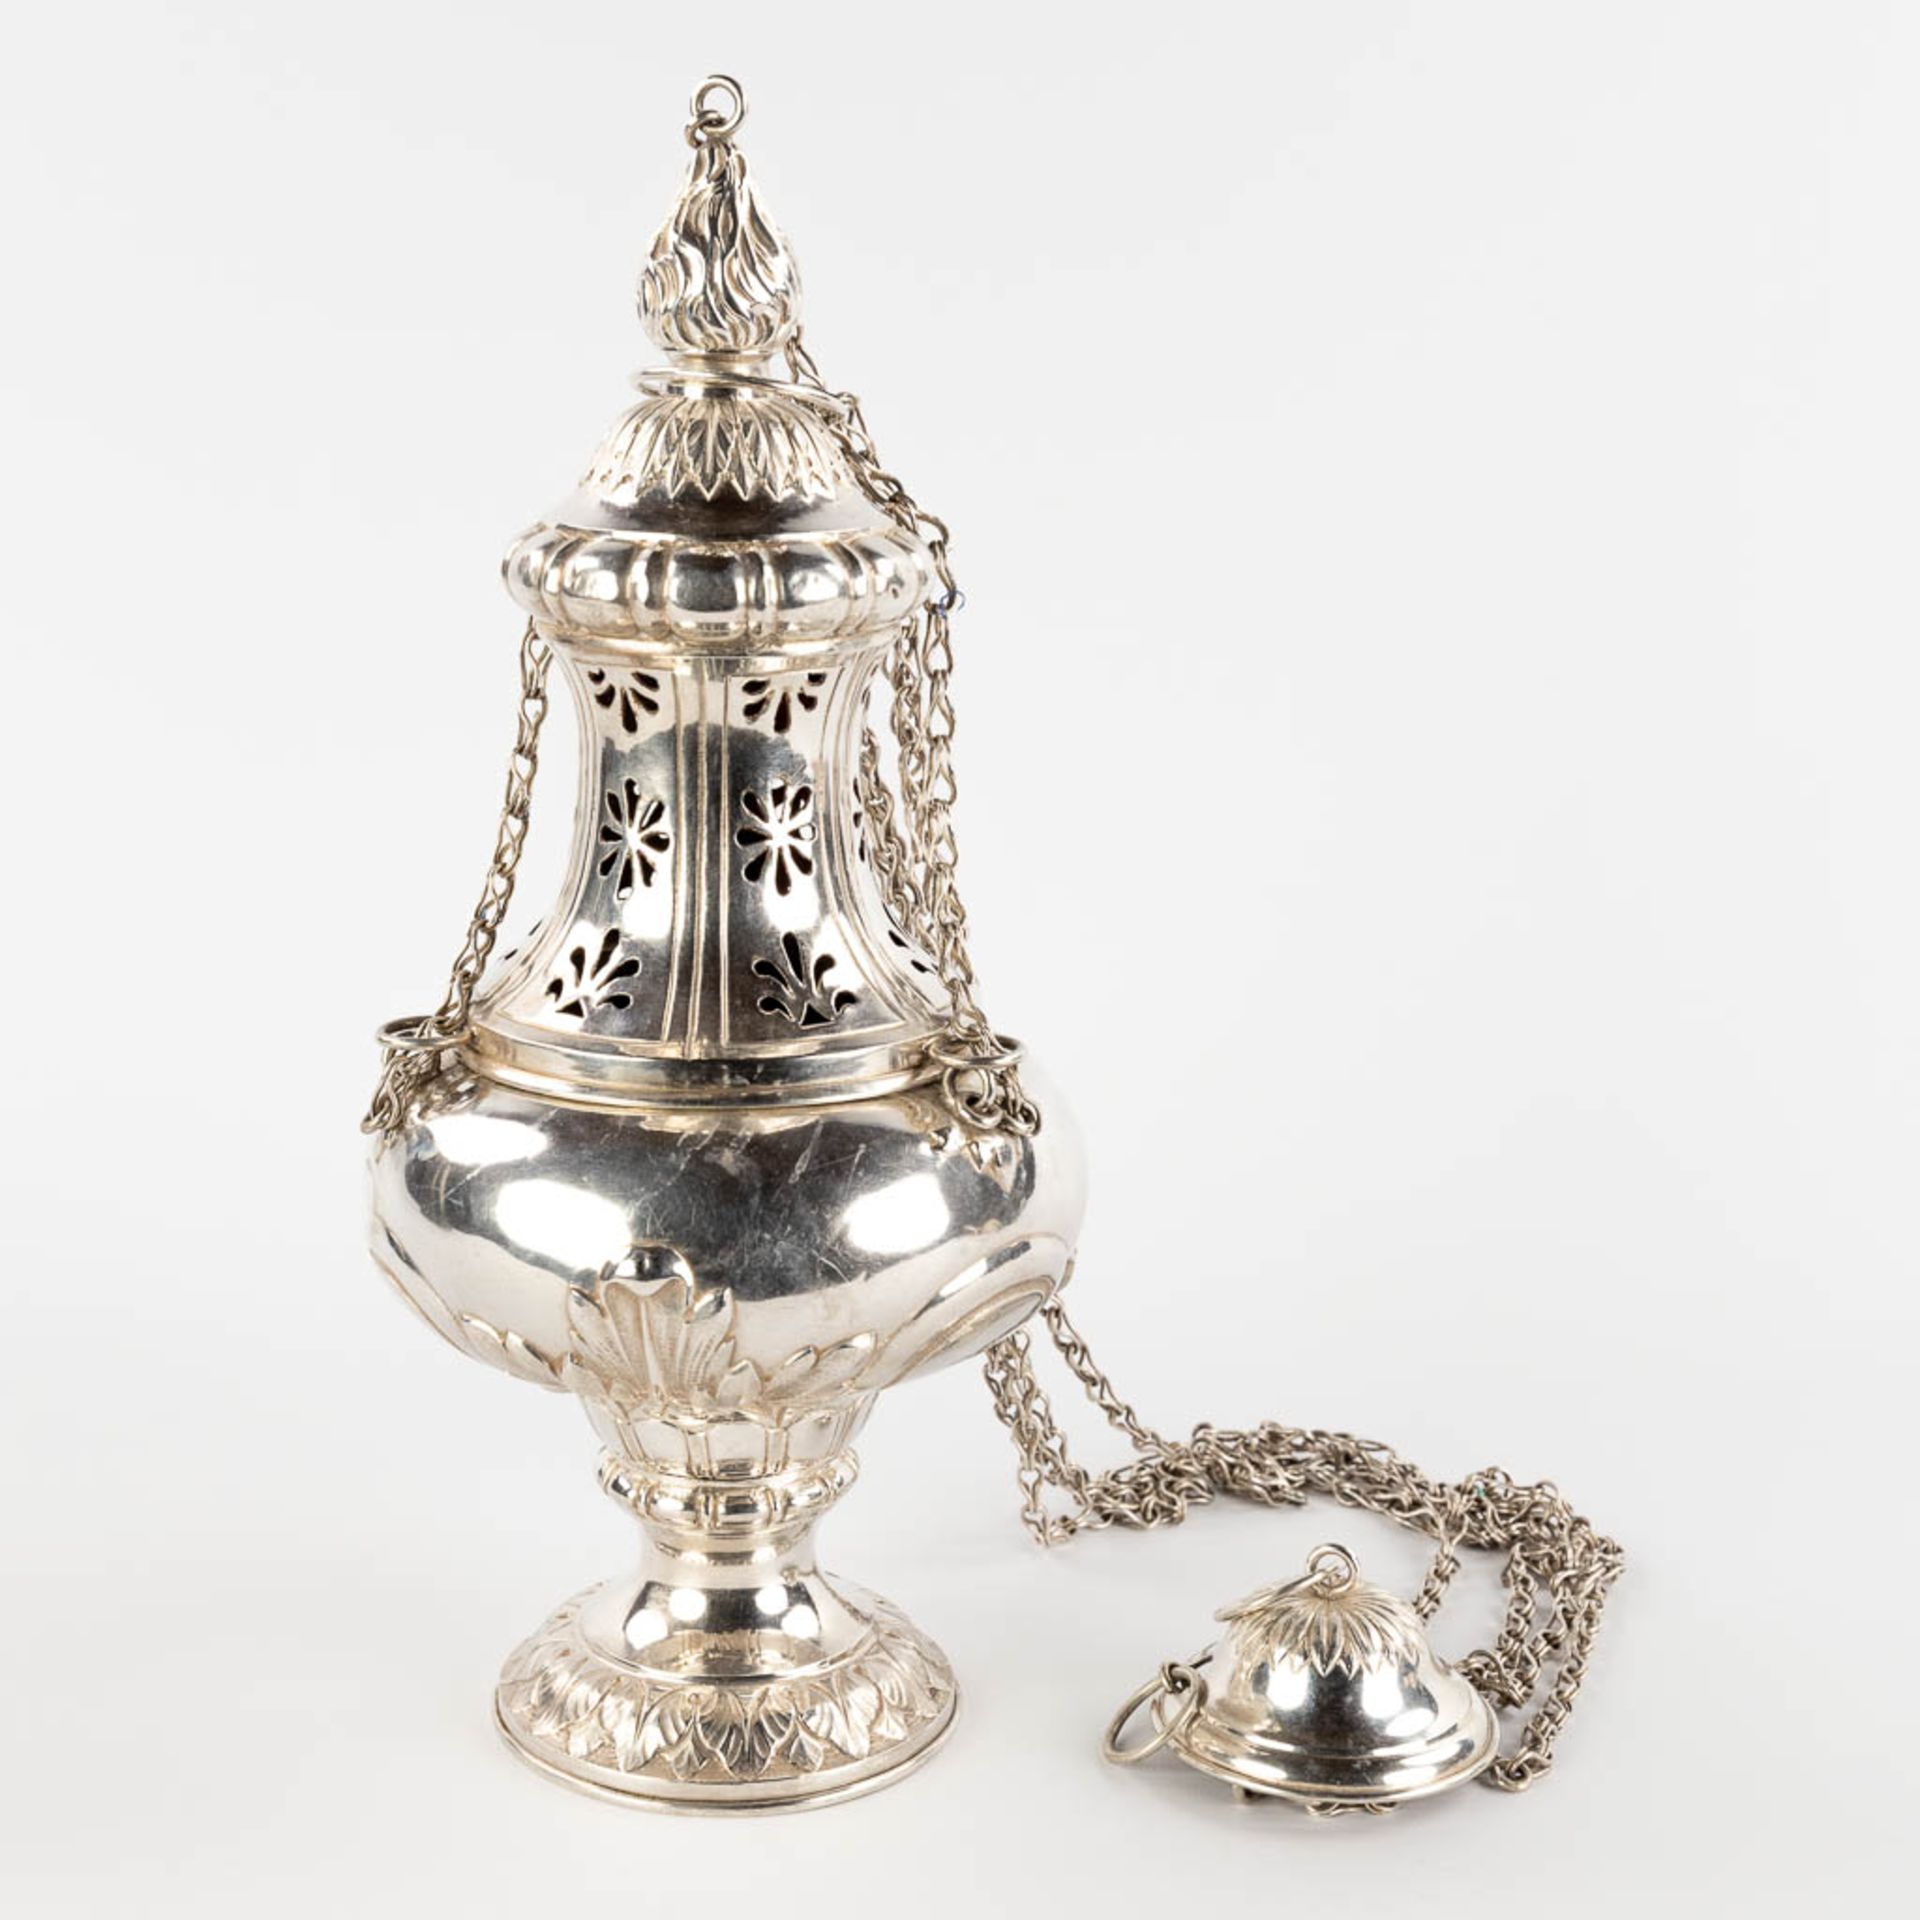 A silver incense burner, spoon, and incense boat, silver. 19th C. 1176g. (H:33 x D:15 cm) - Bild 3 aus 16